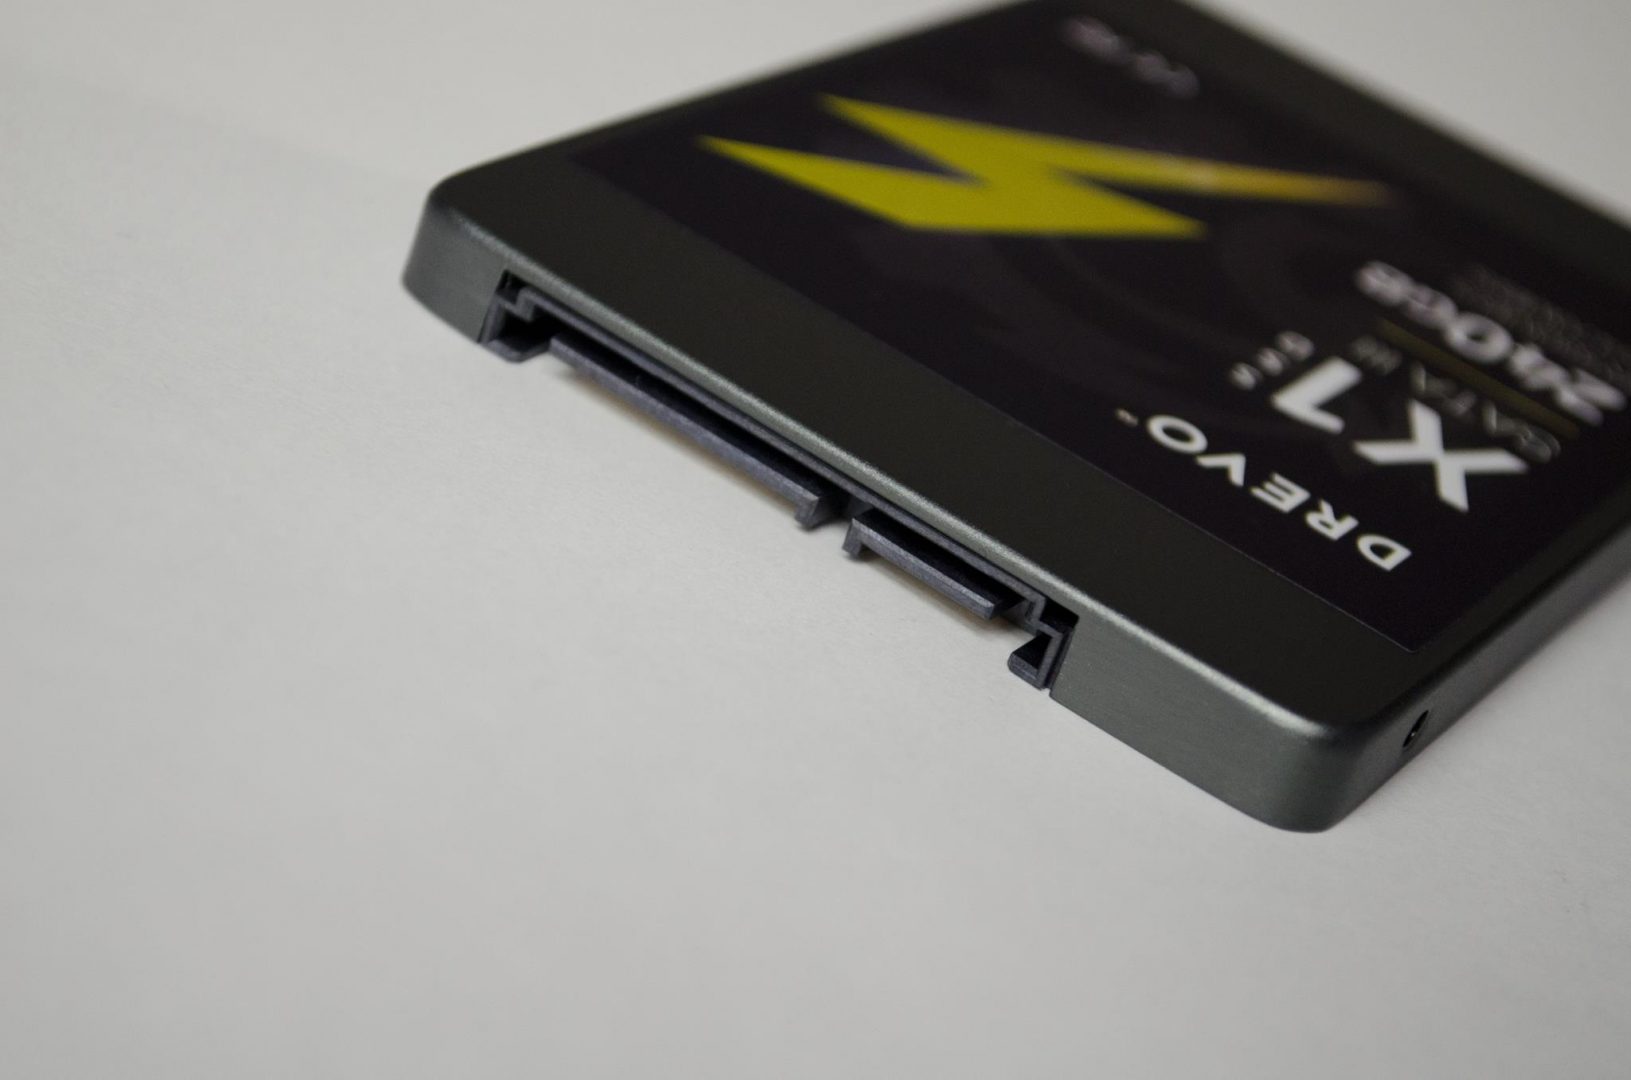 Drevo X1 240GB SSD Review